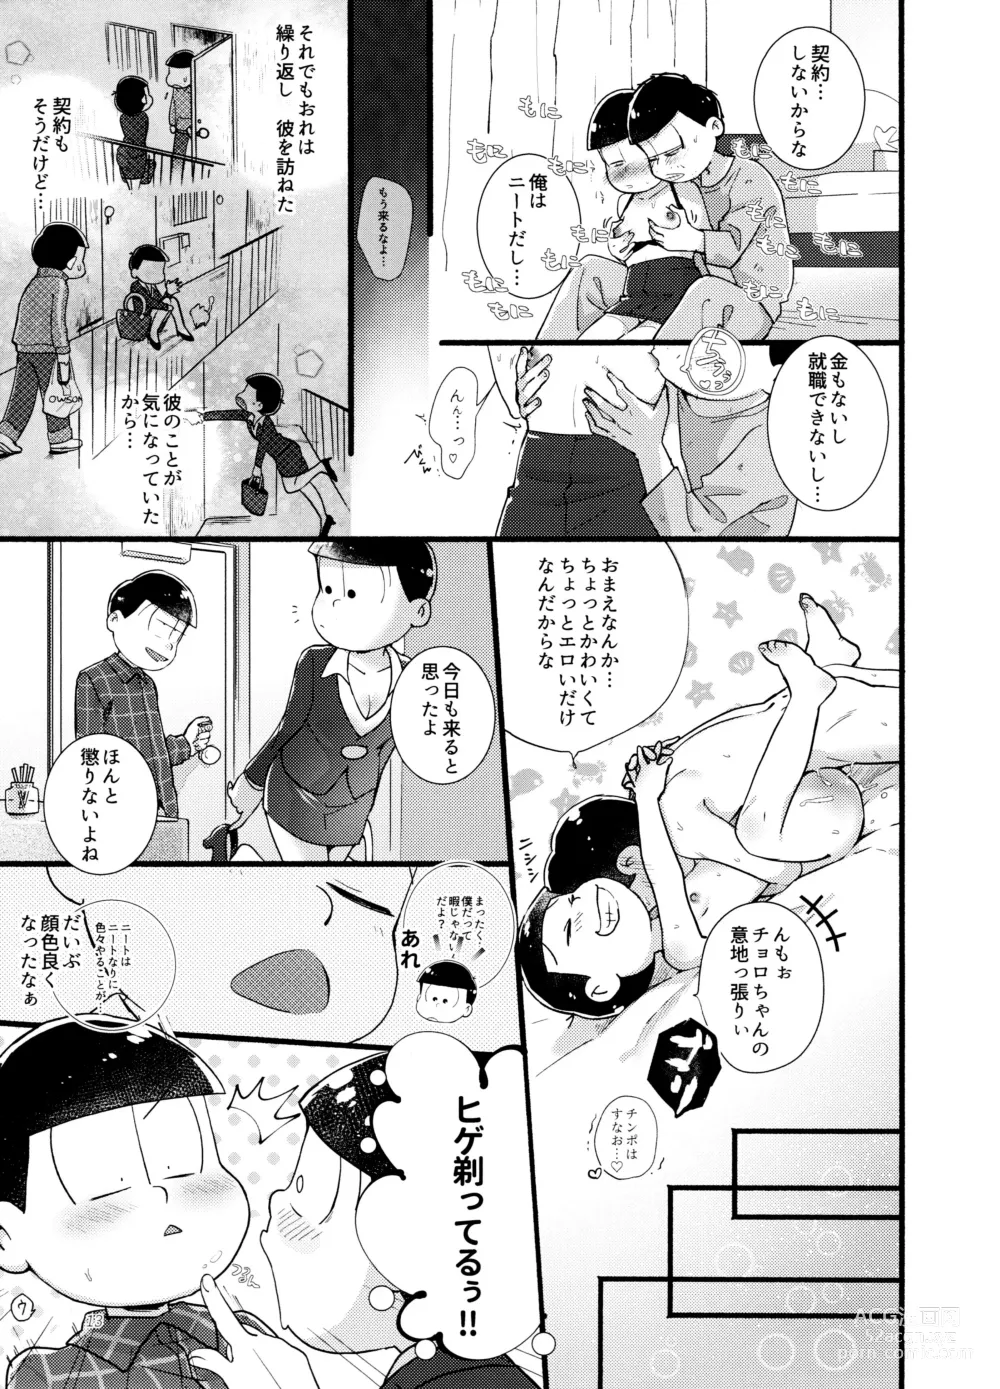 Page 13 of doujinshi Momare Keiyaku